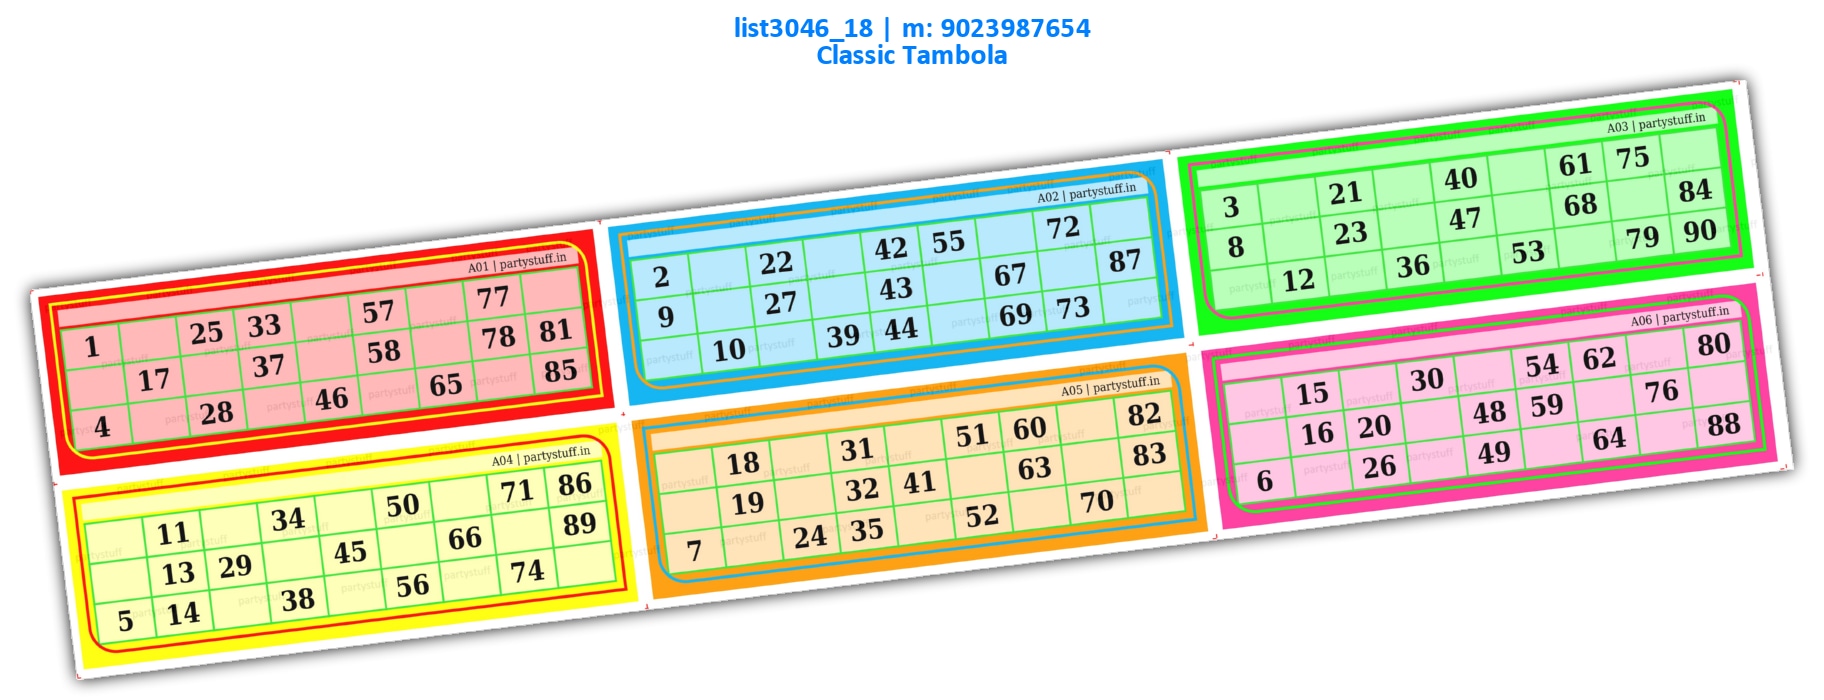 Classic Colorful Grid 5 | Printed list3046_18 Printed Tambola Housie